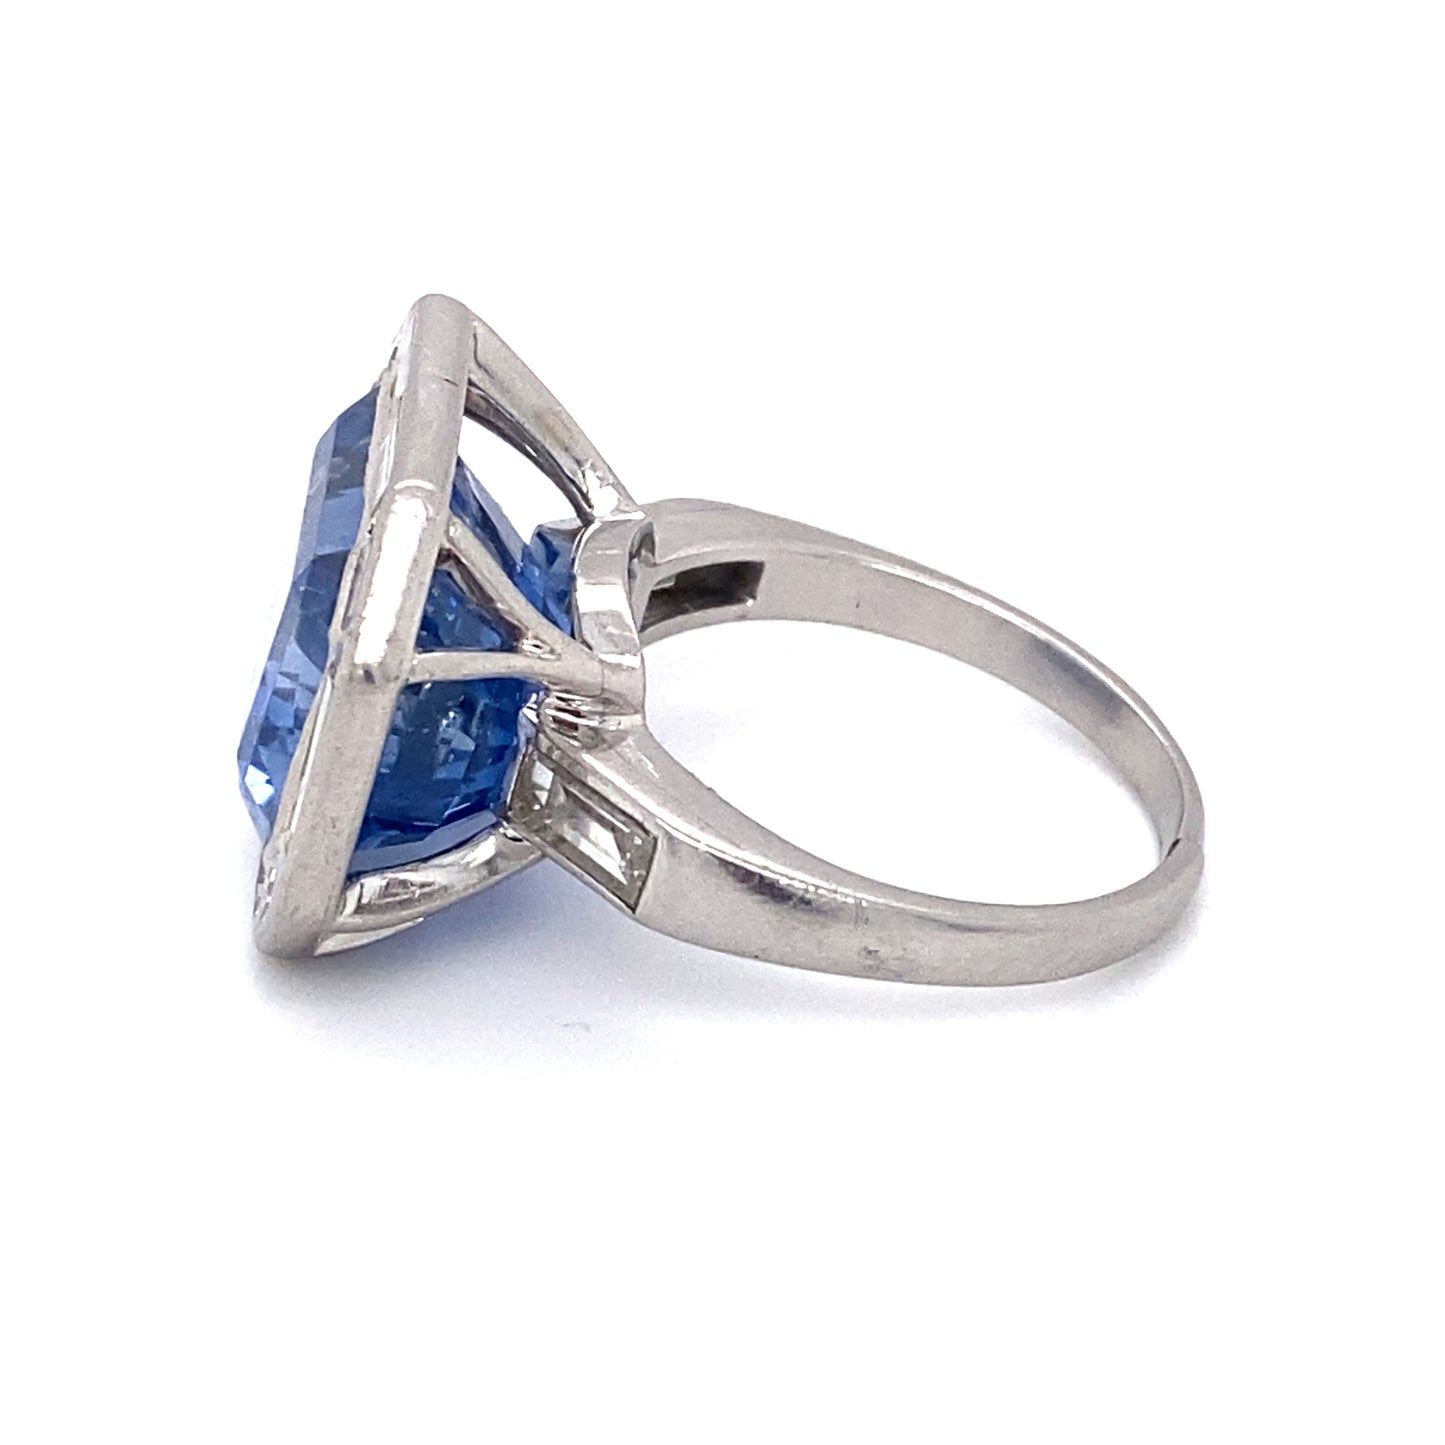 Circa 1980 20 Carat Natural Ceylon Sapphire and Diamond Ring in Platinum